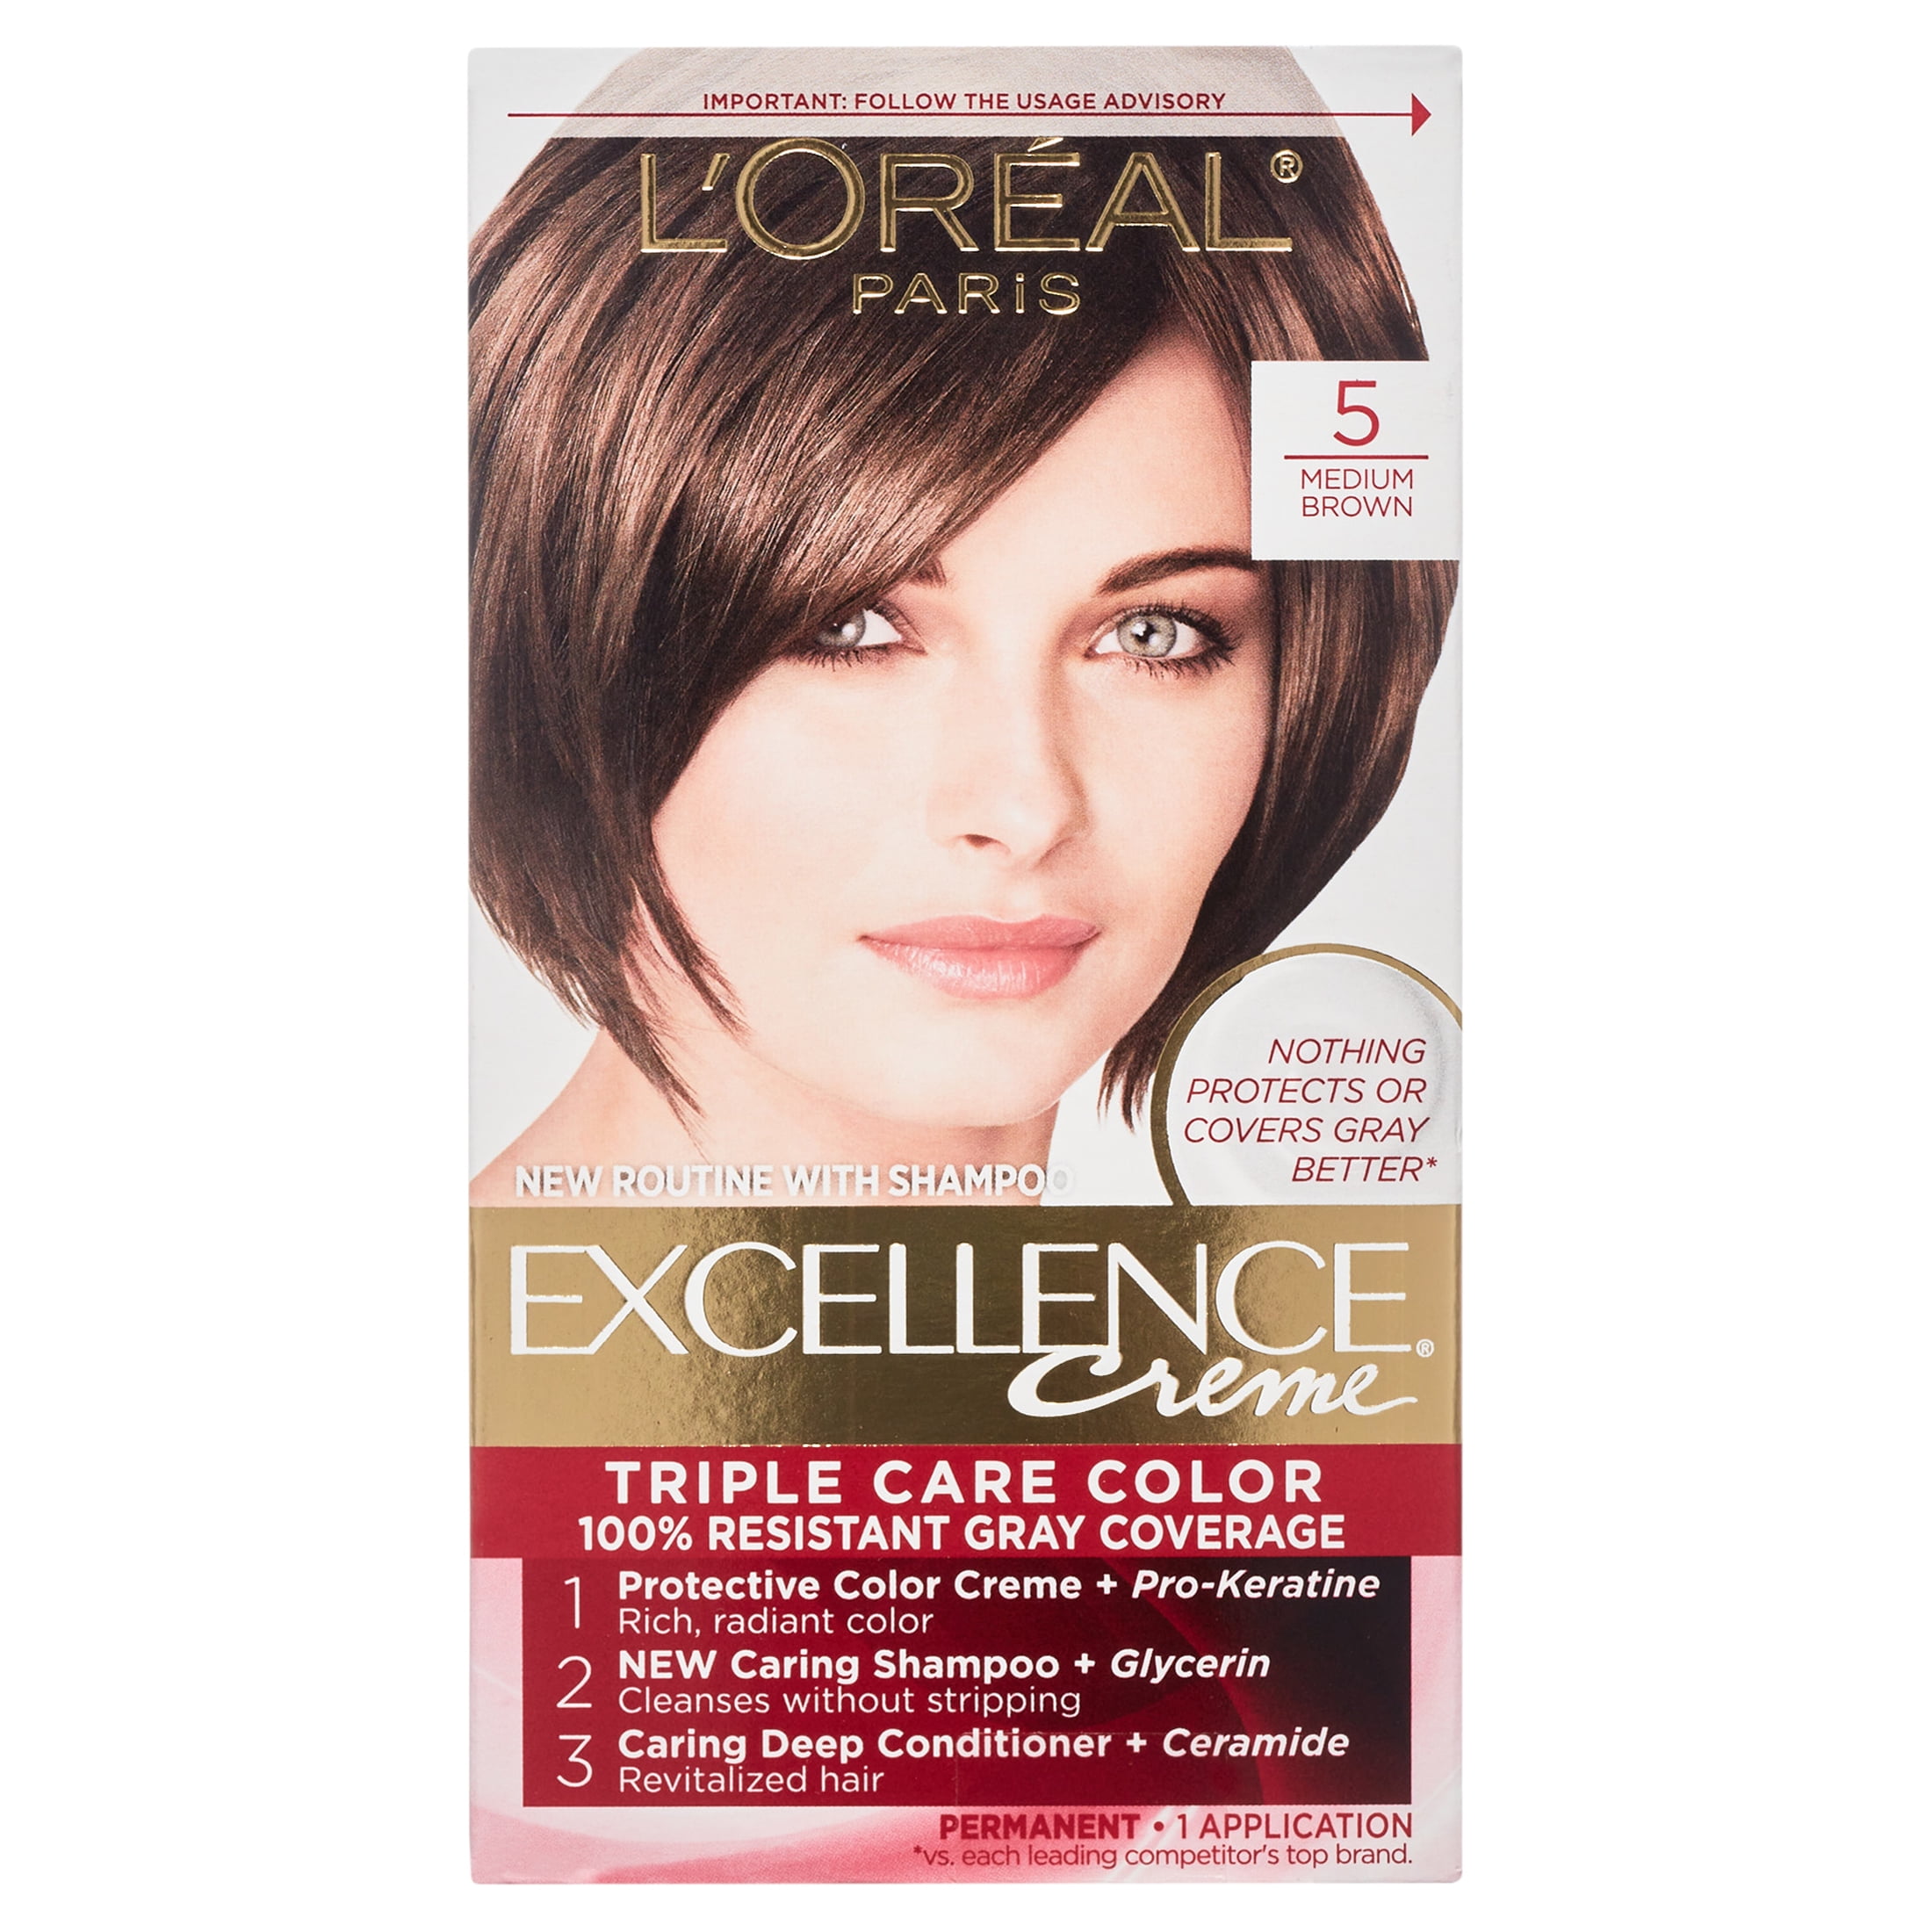 5 / 5N Brown , L'oreal Pro DIA RICHESSE Demi-Permanent Tone-on-Tone Creme  Hair Color Dye, Ammonia-Free Loreal Cream Haircolor - Pack of 2 w/ SLEEK